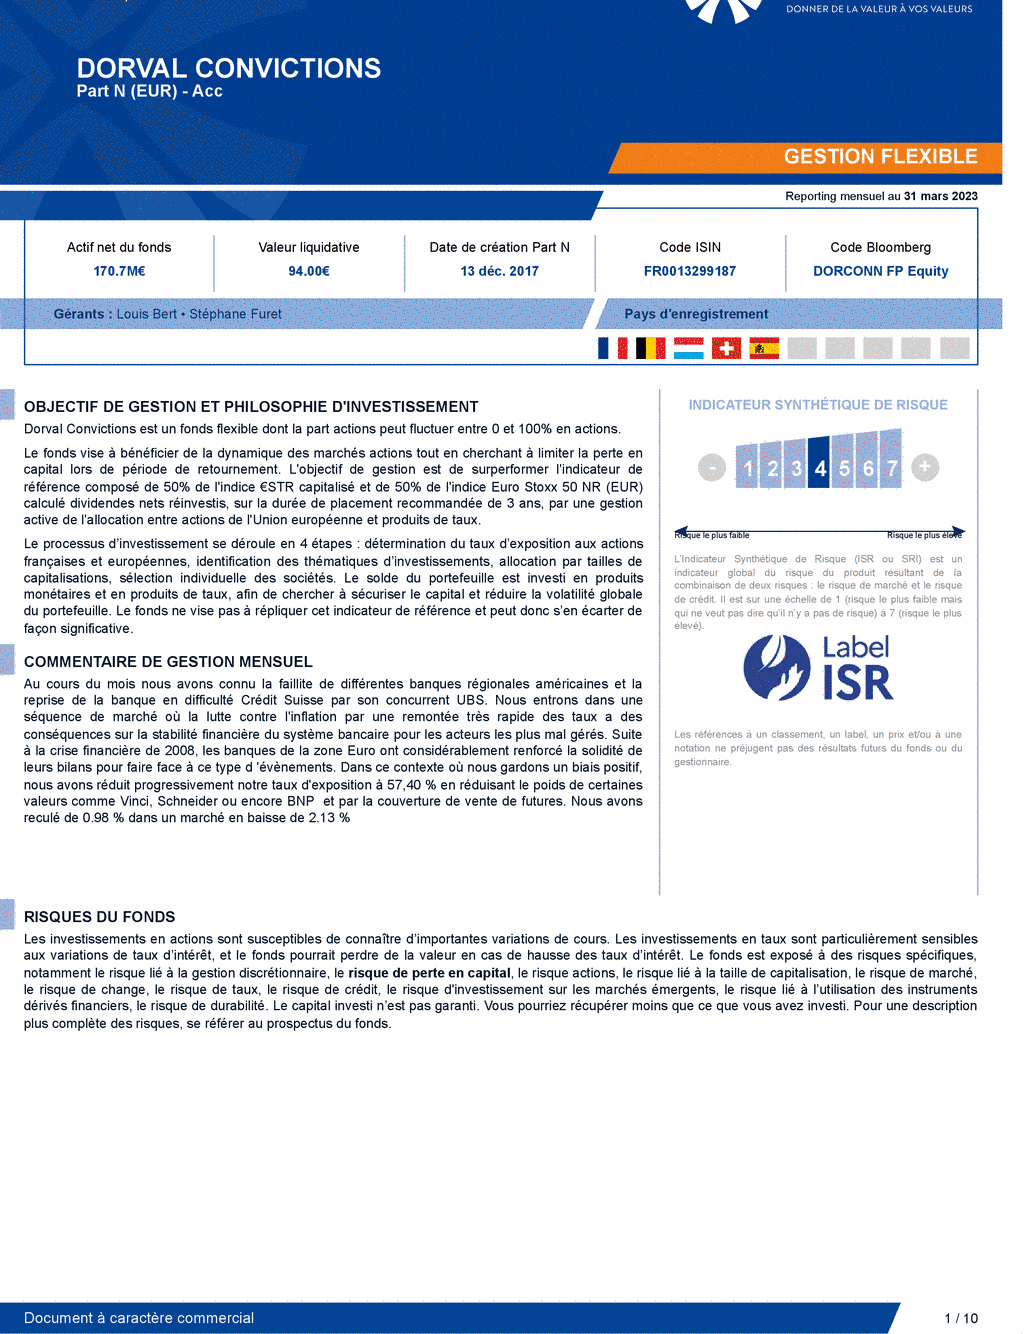 Reporting DORVAL CONVICTIONS N - 31/03/2023 - Français